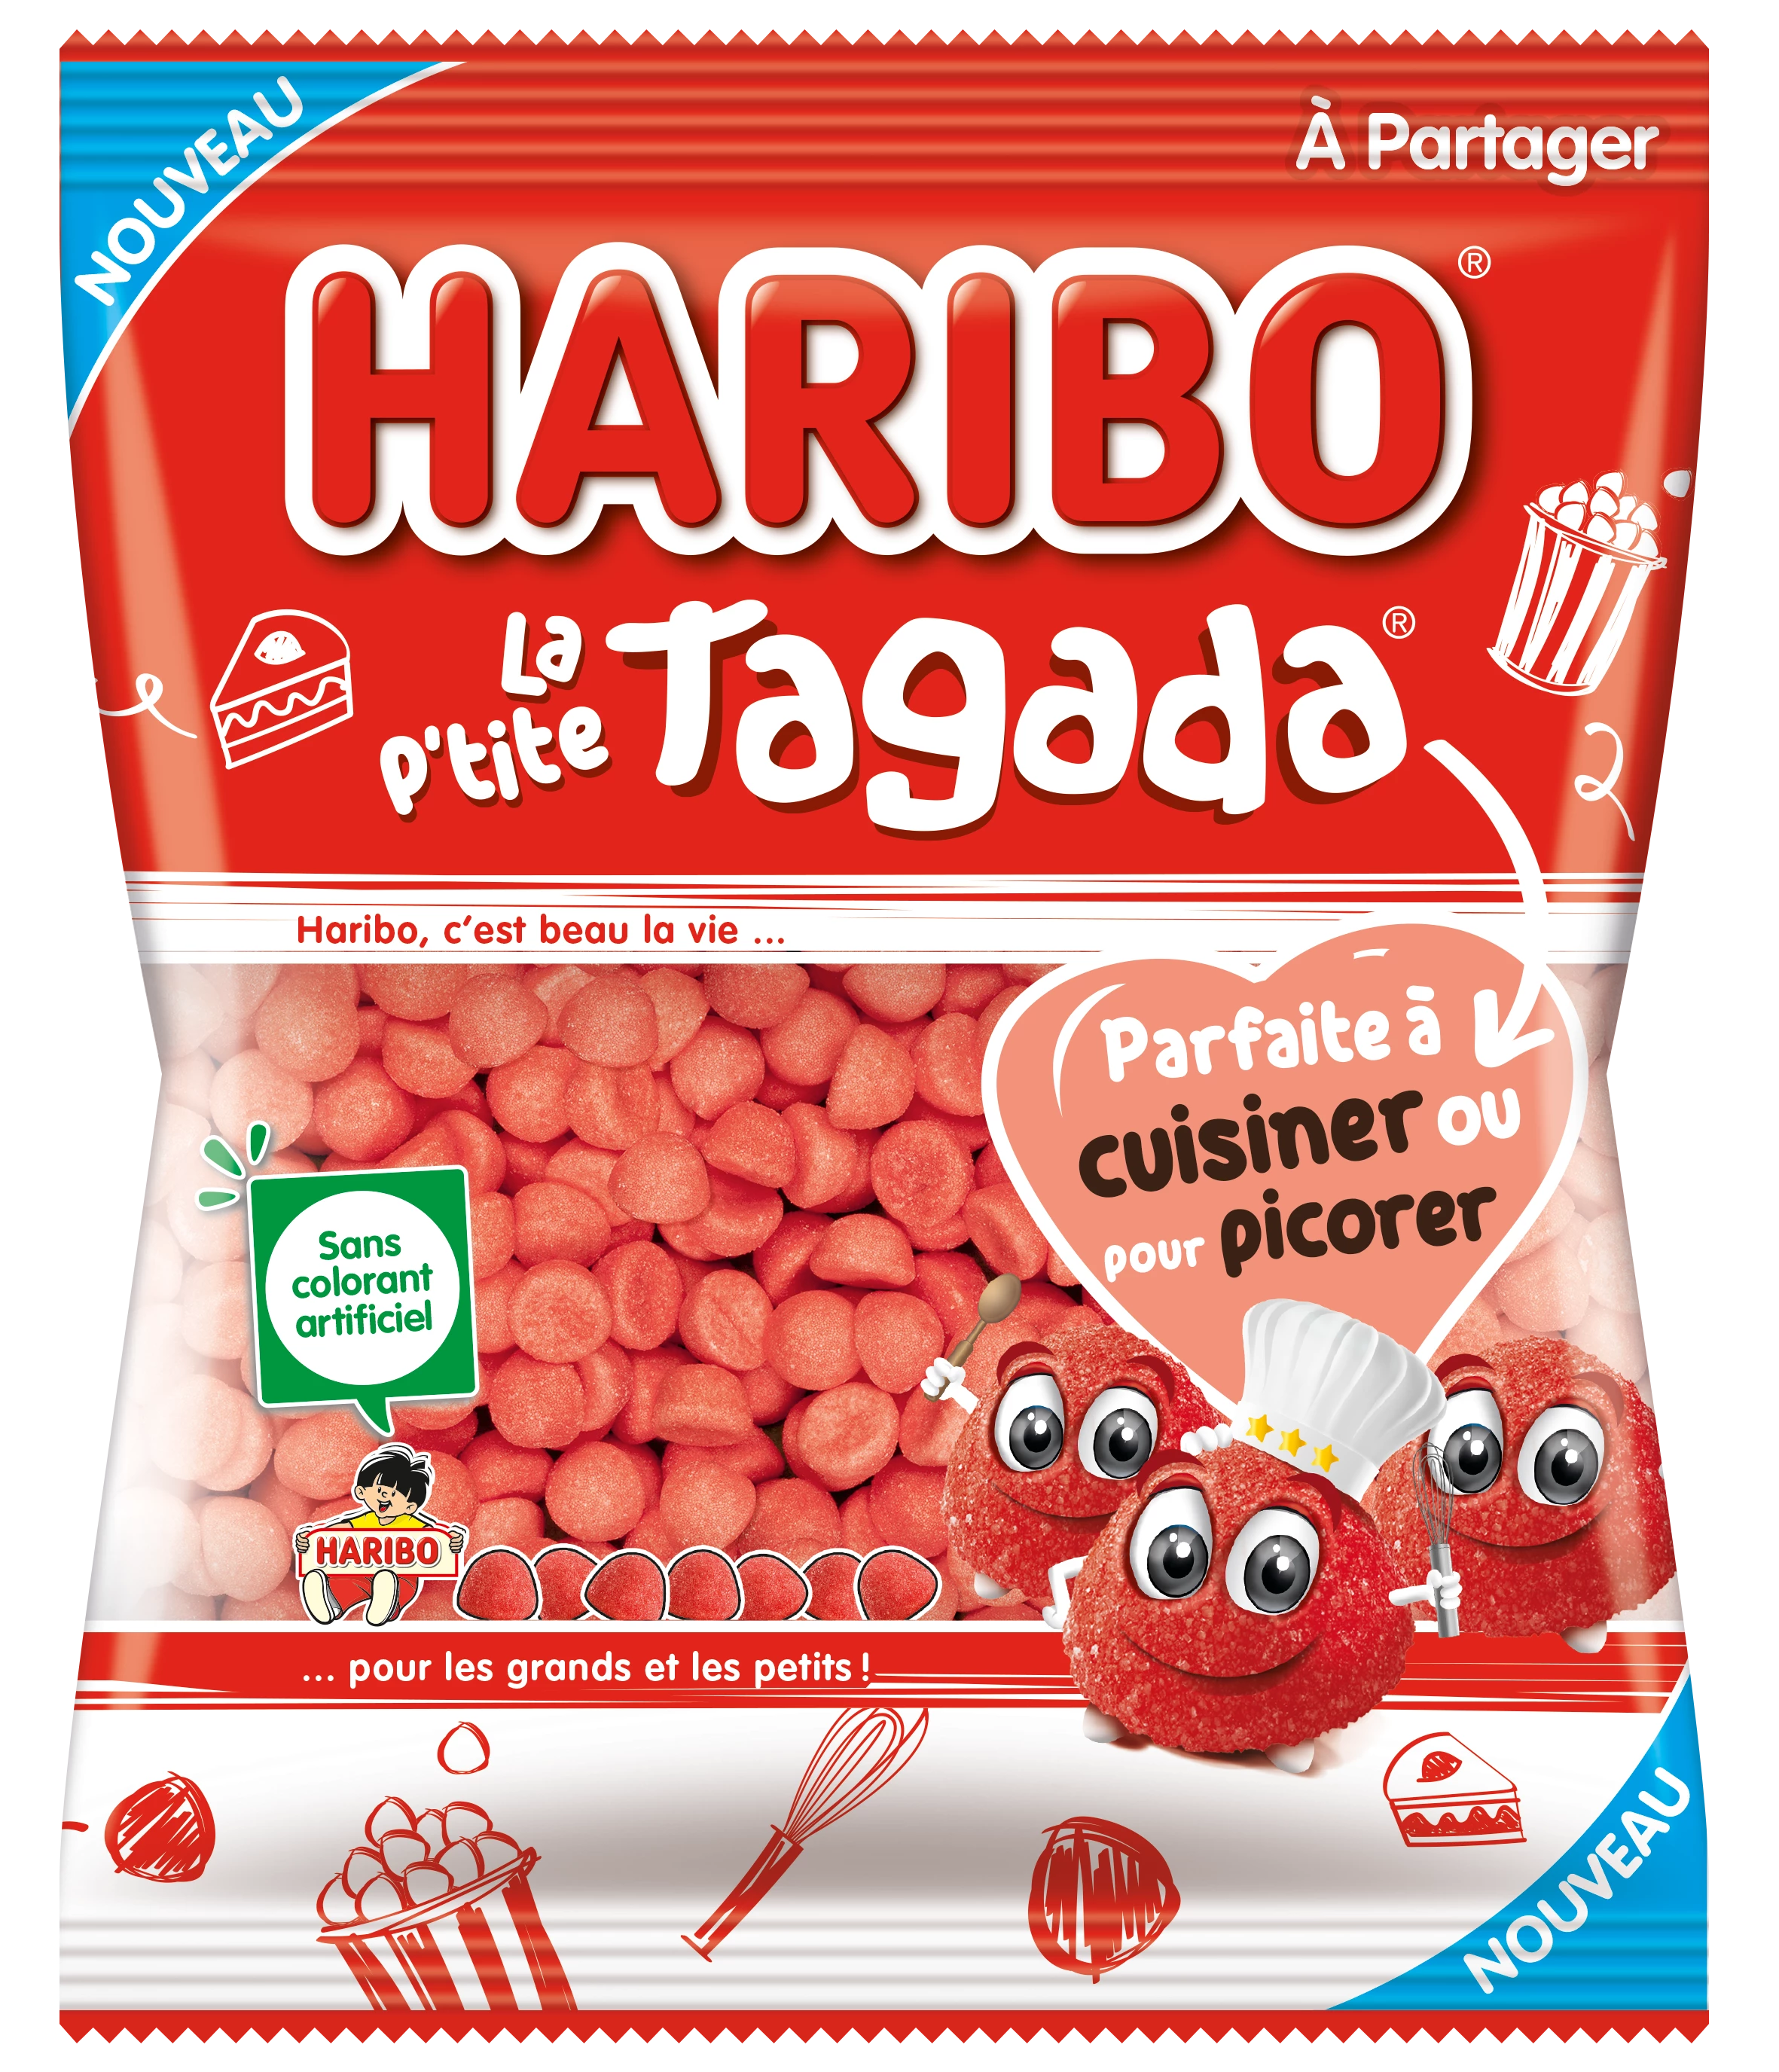 Bonbons La P'tite Tagada, 220g - HARIBO